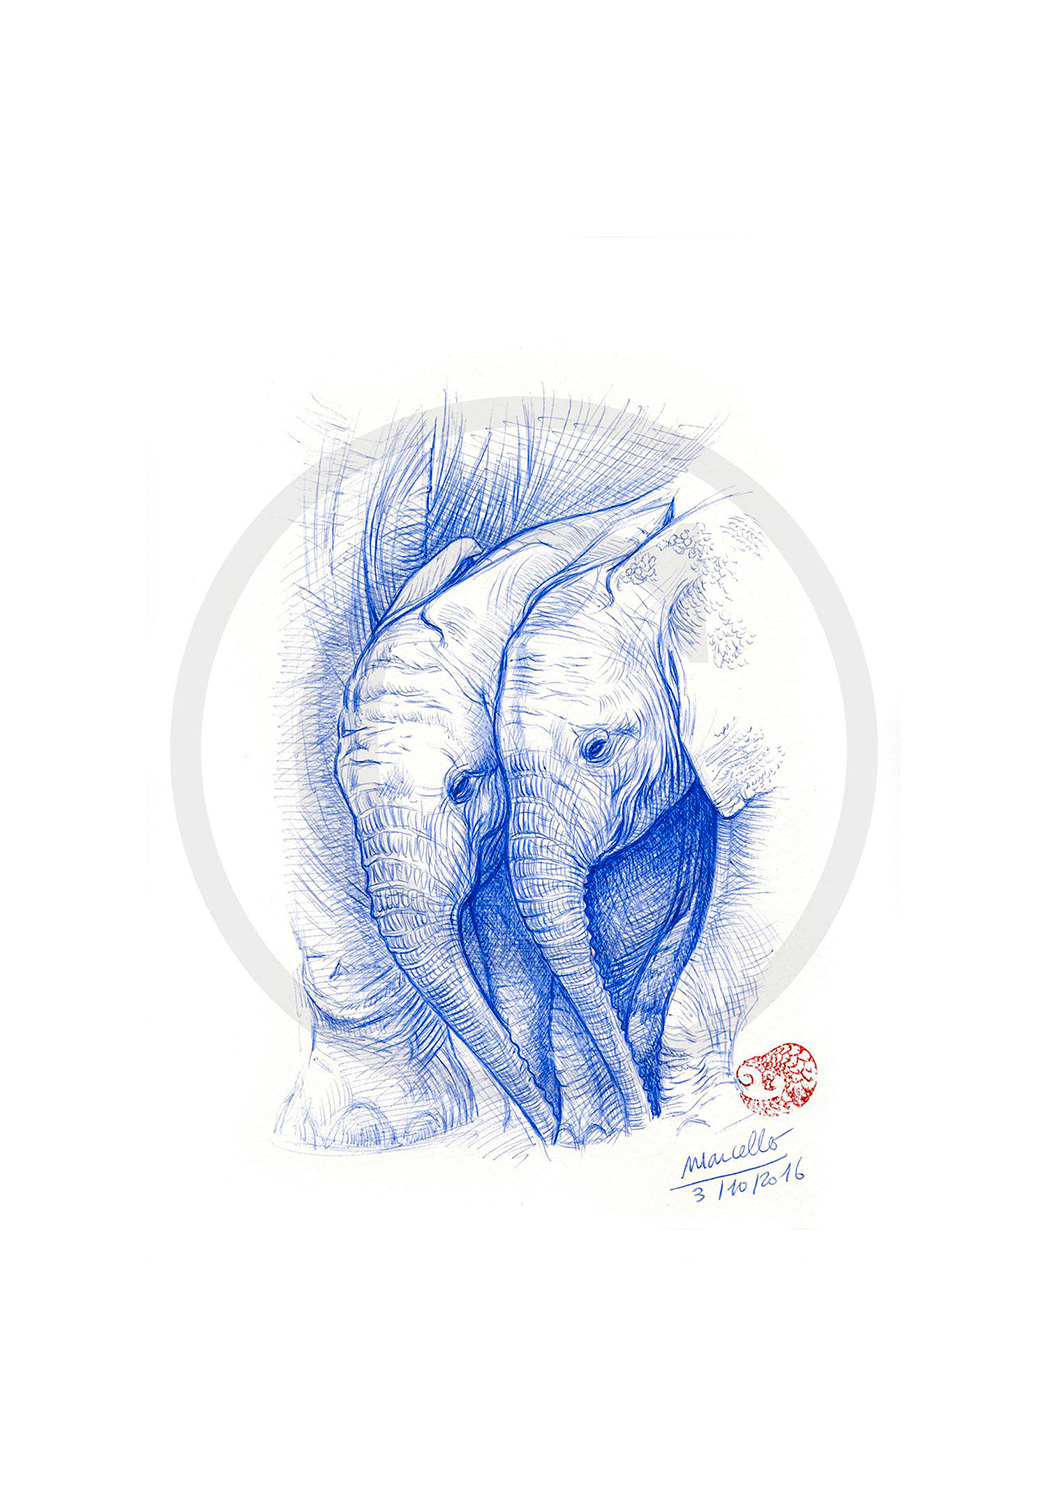 Marcello-art: Wish Card 354 - Baby elephant